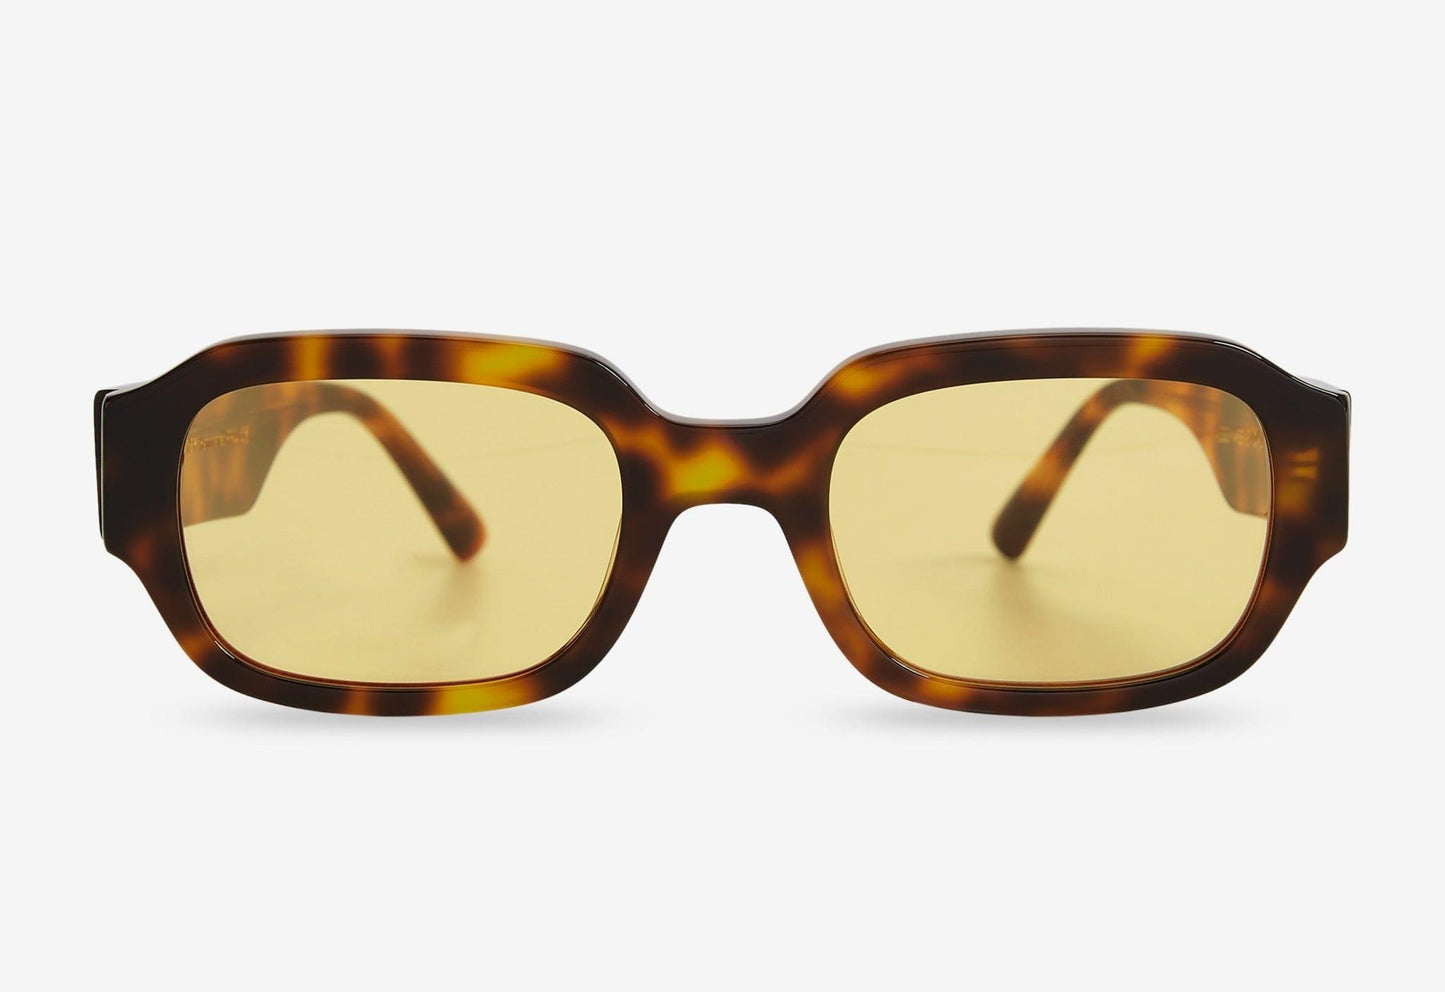 Downey, Rectangular sunglasses for men and women yellow lens UV400 protection